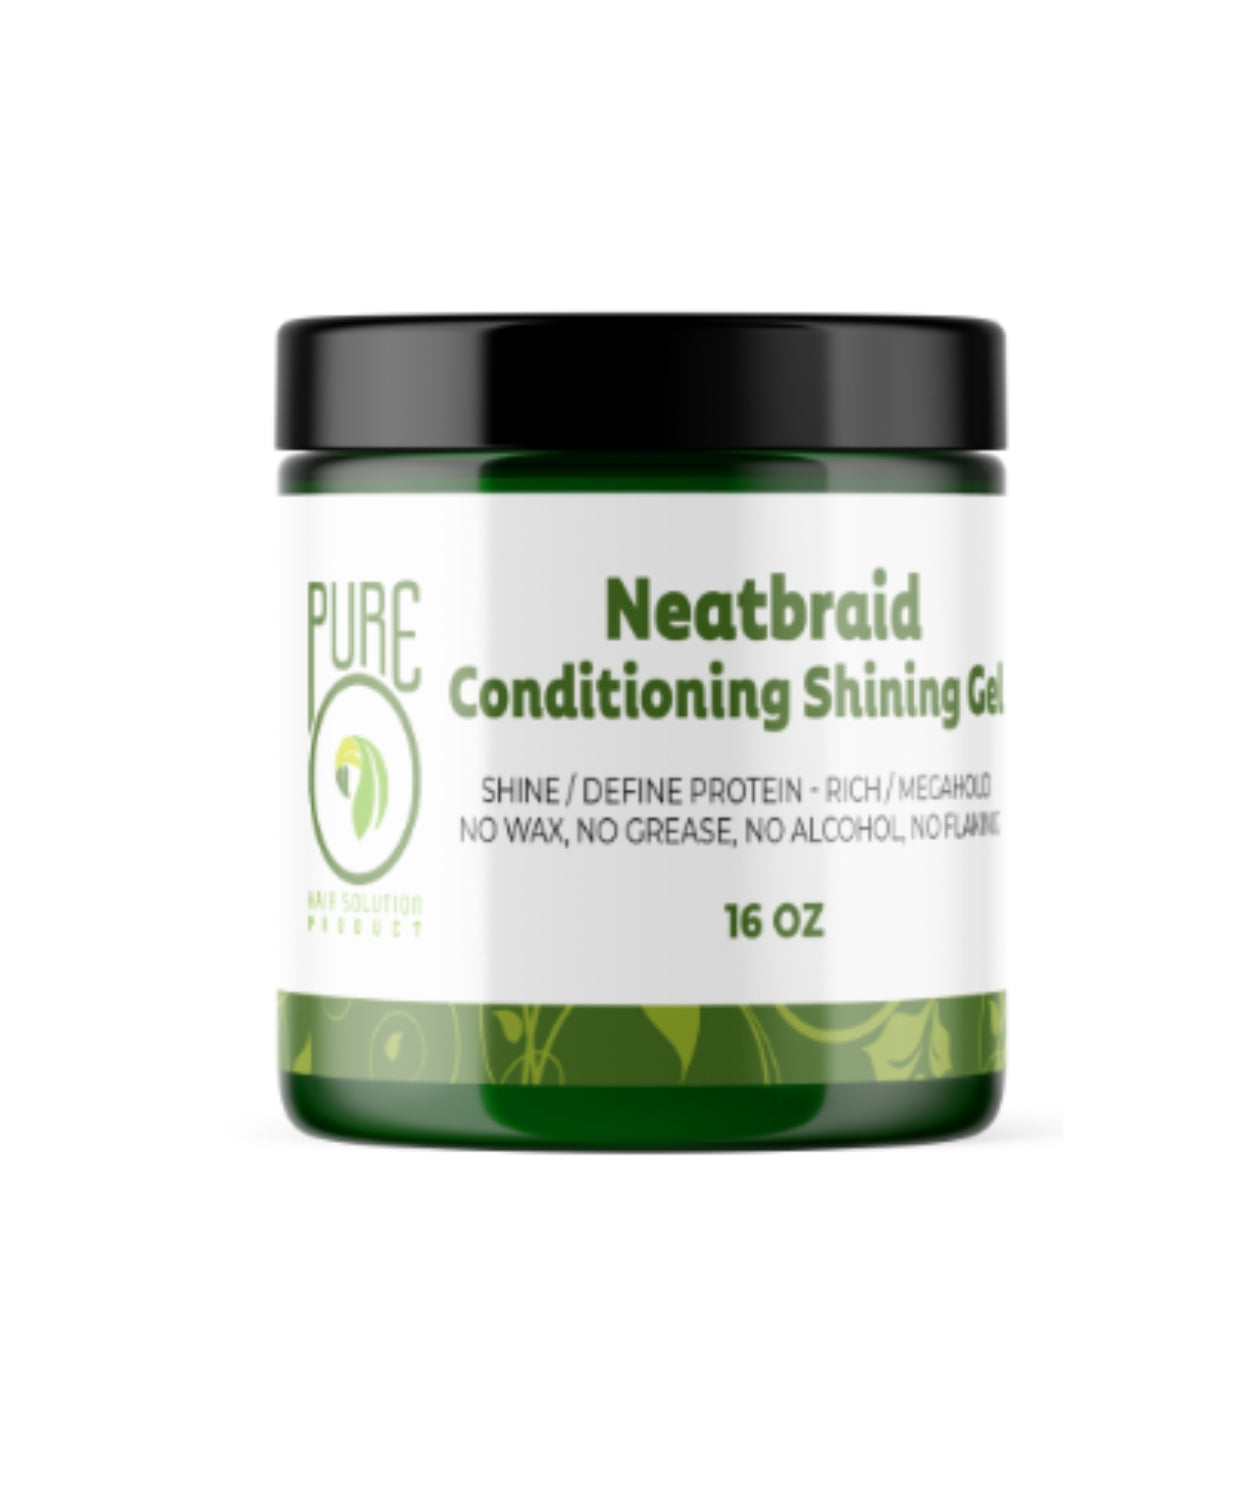 Neatbraid Conditioning Shining Gel